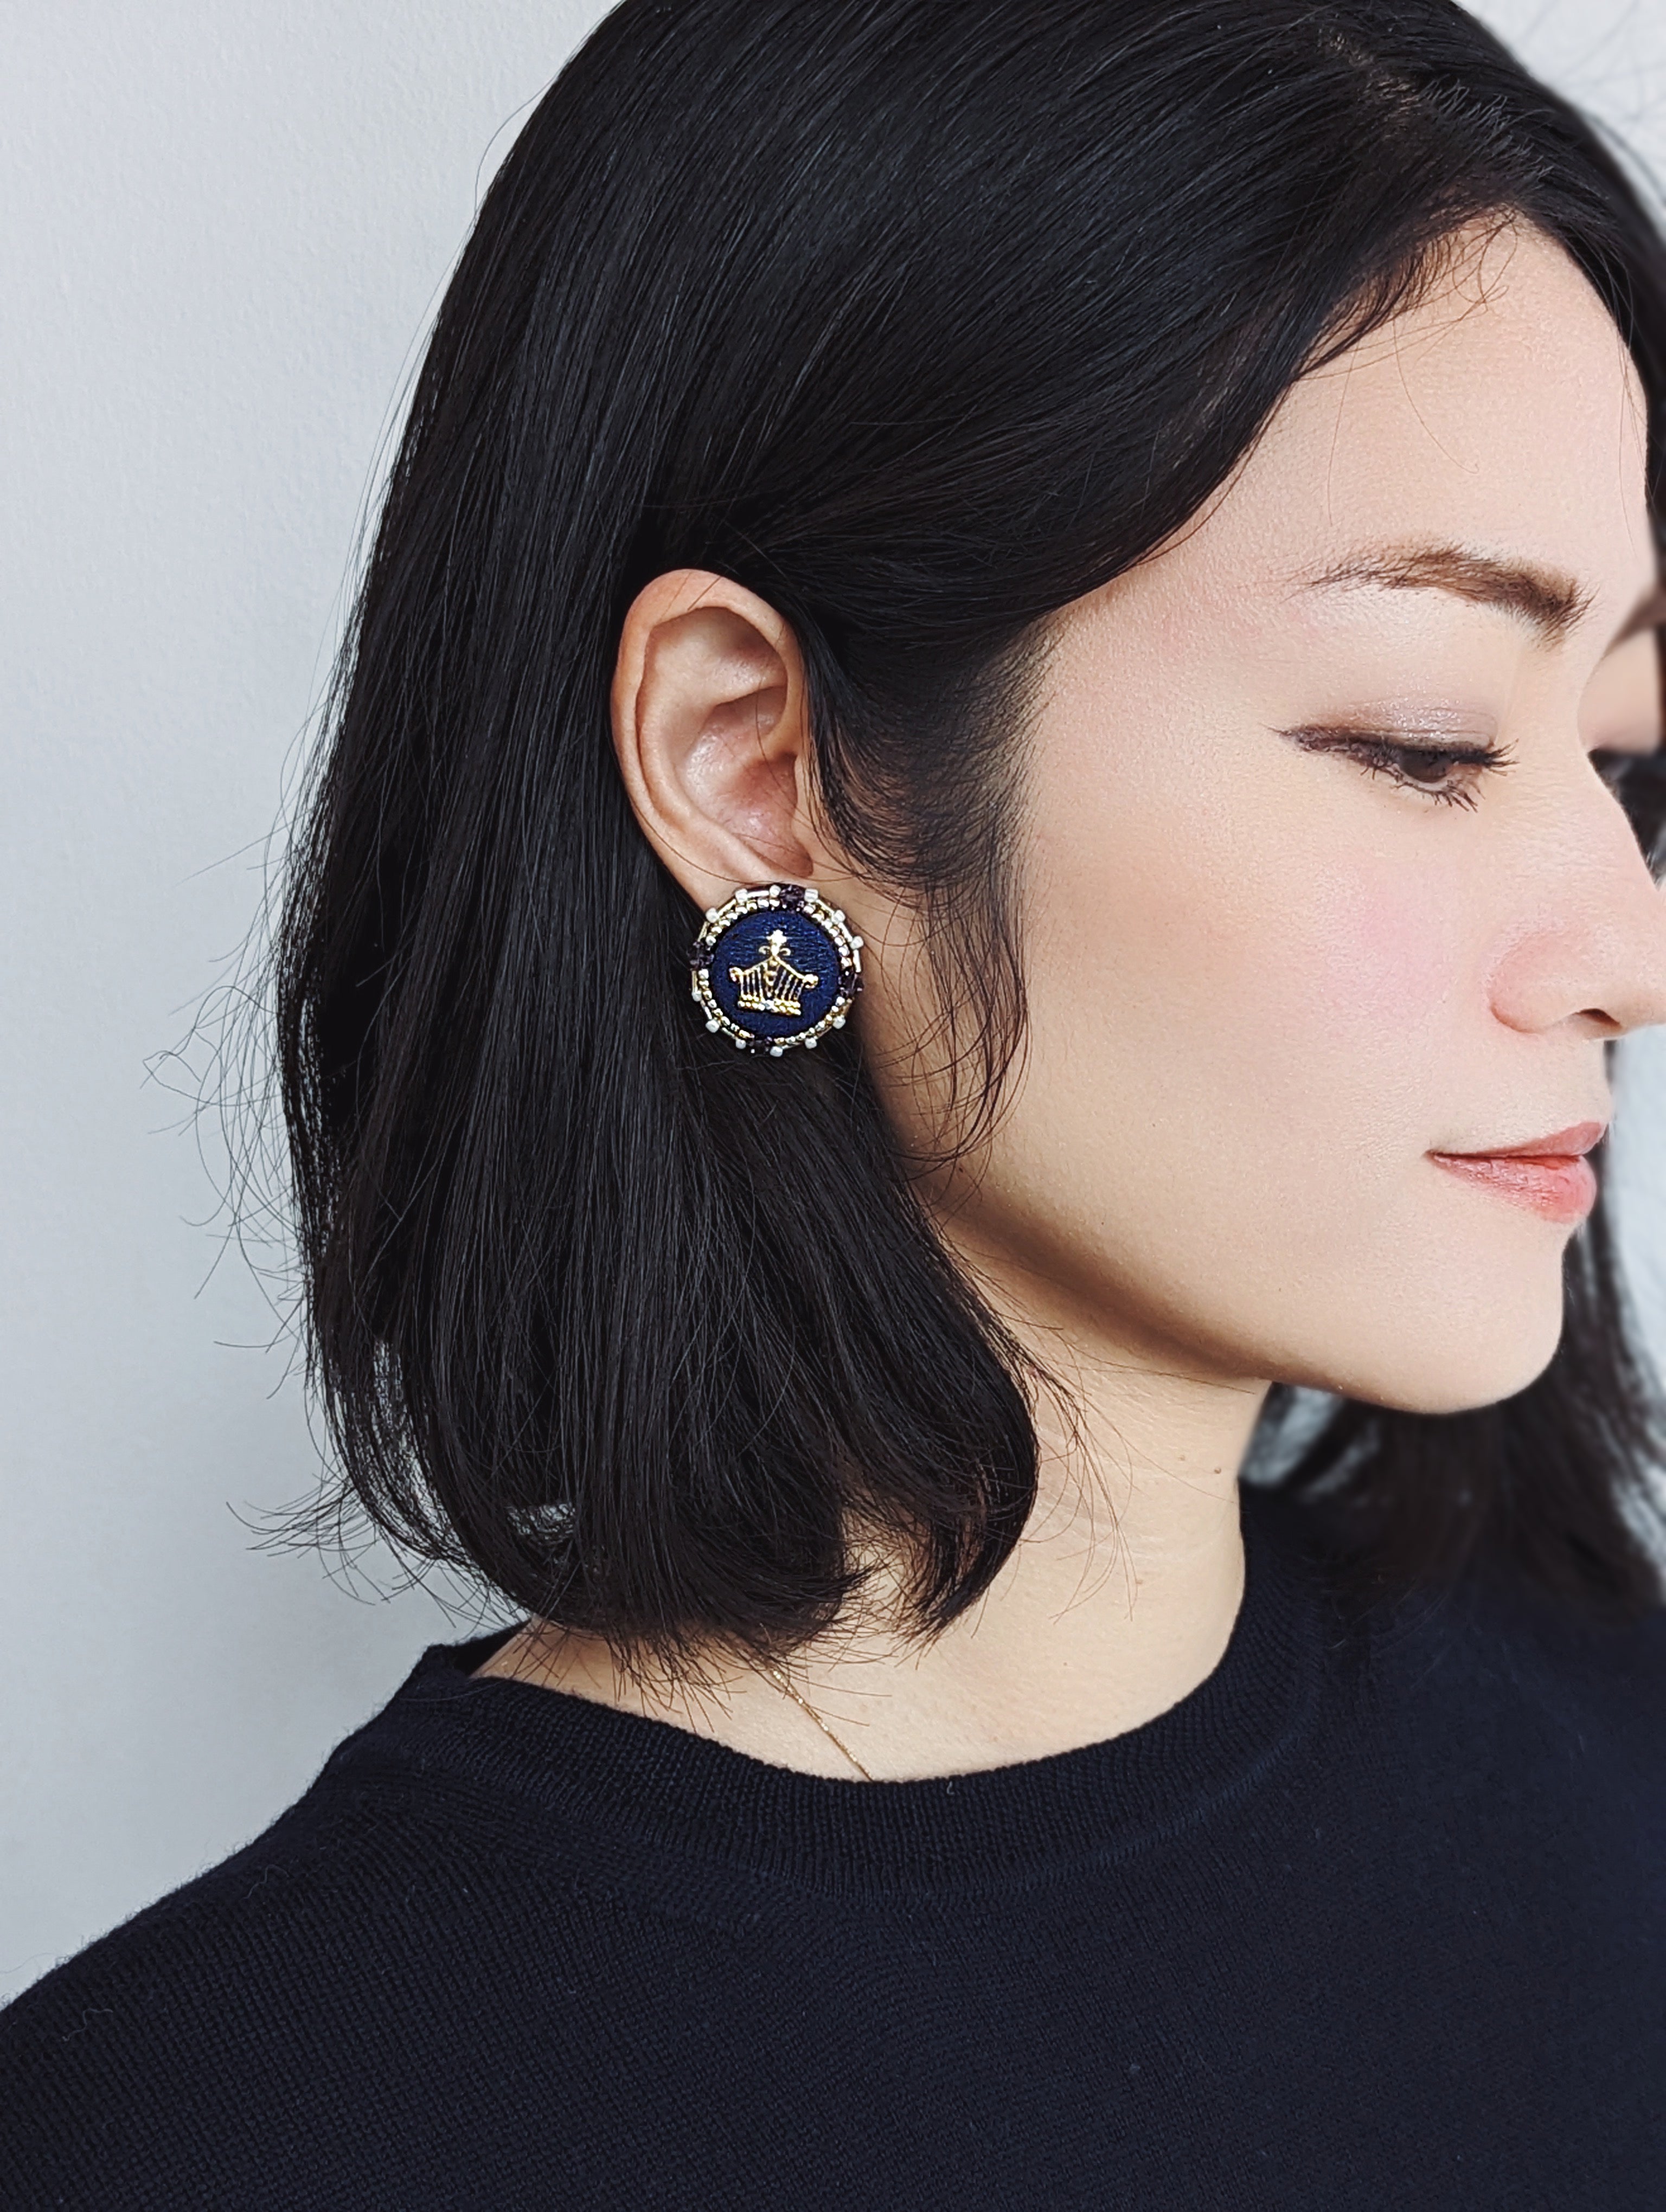 Kinsai Ear Accessory - Blue